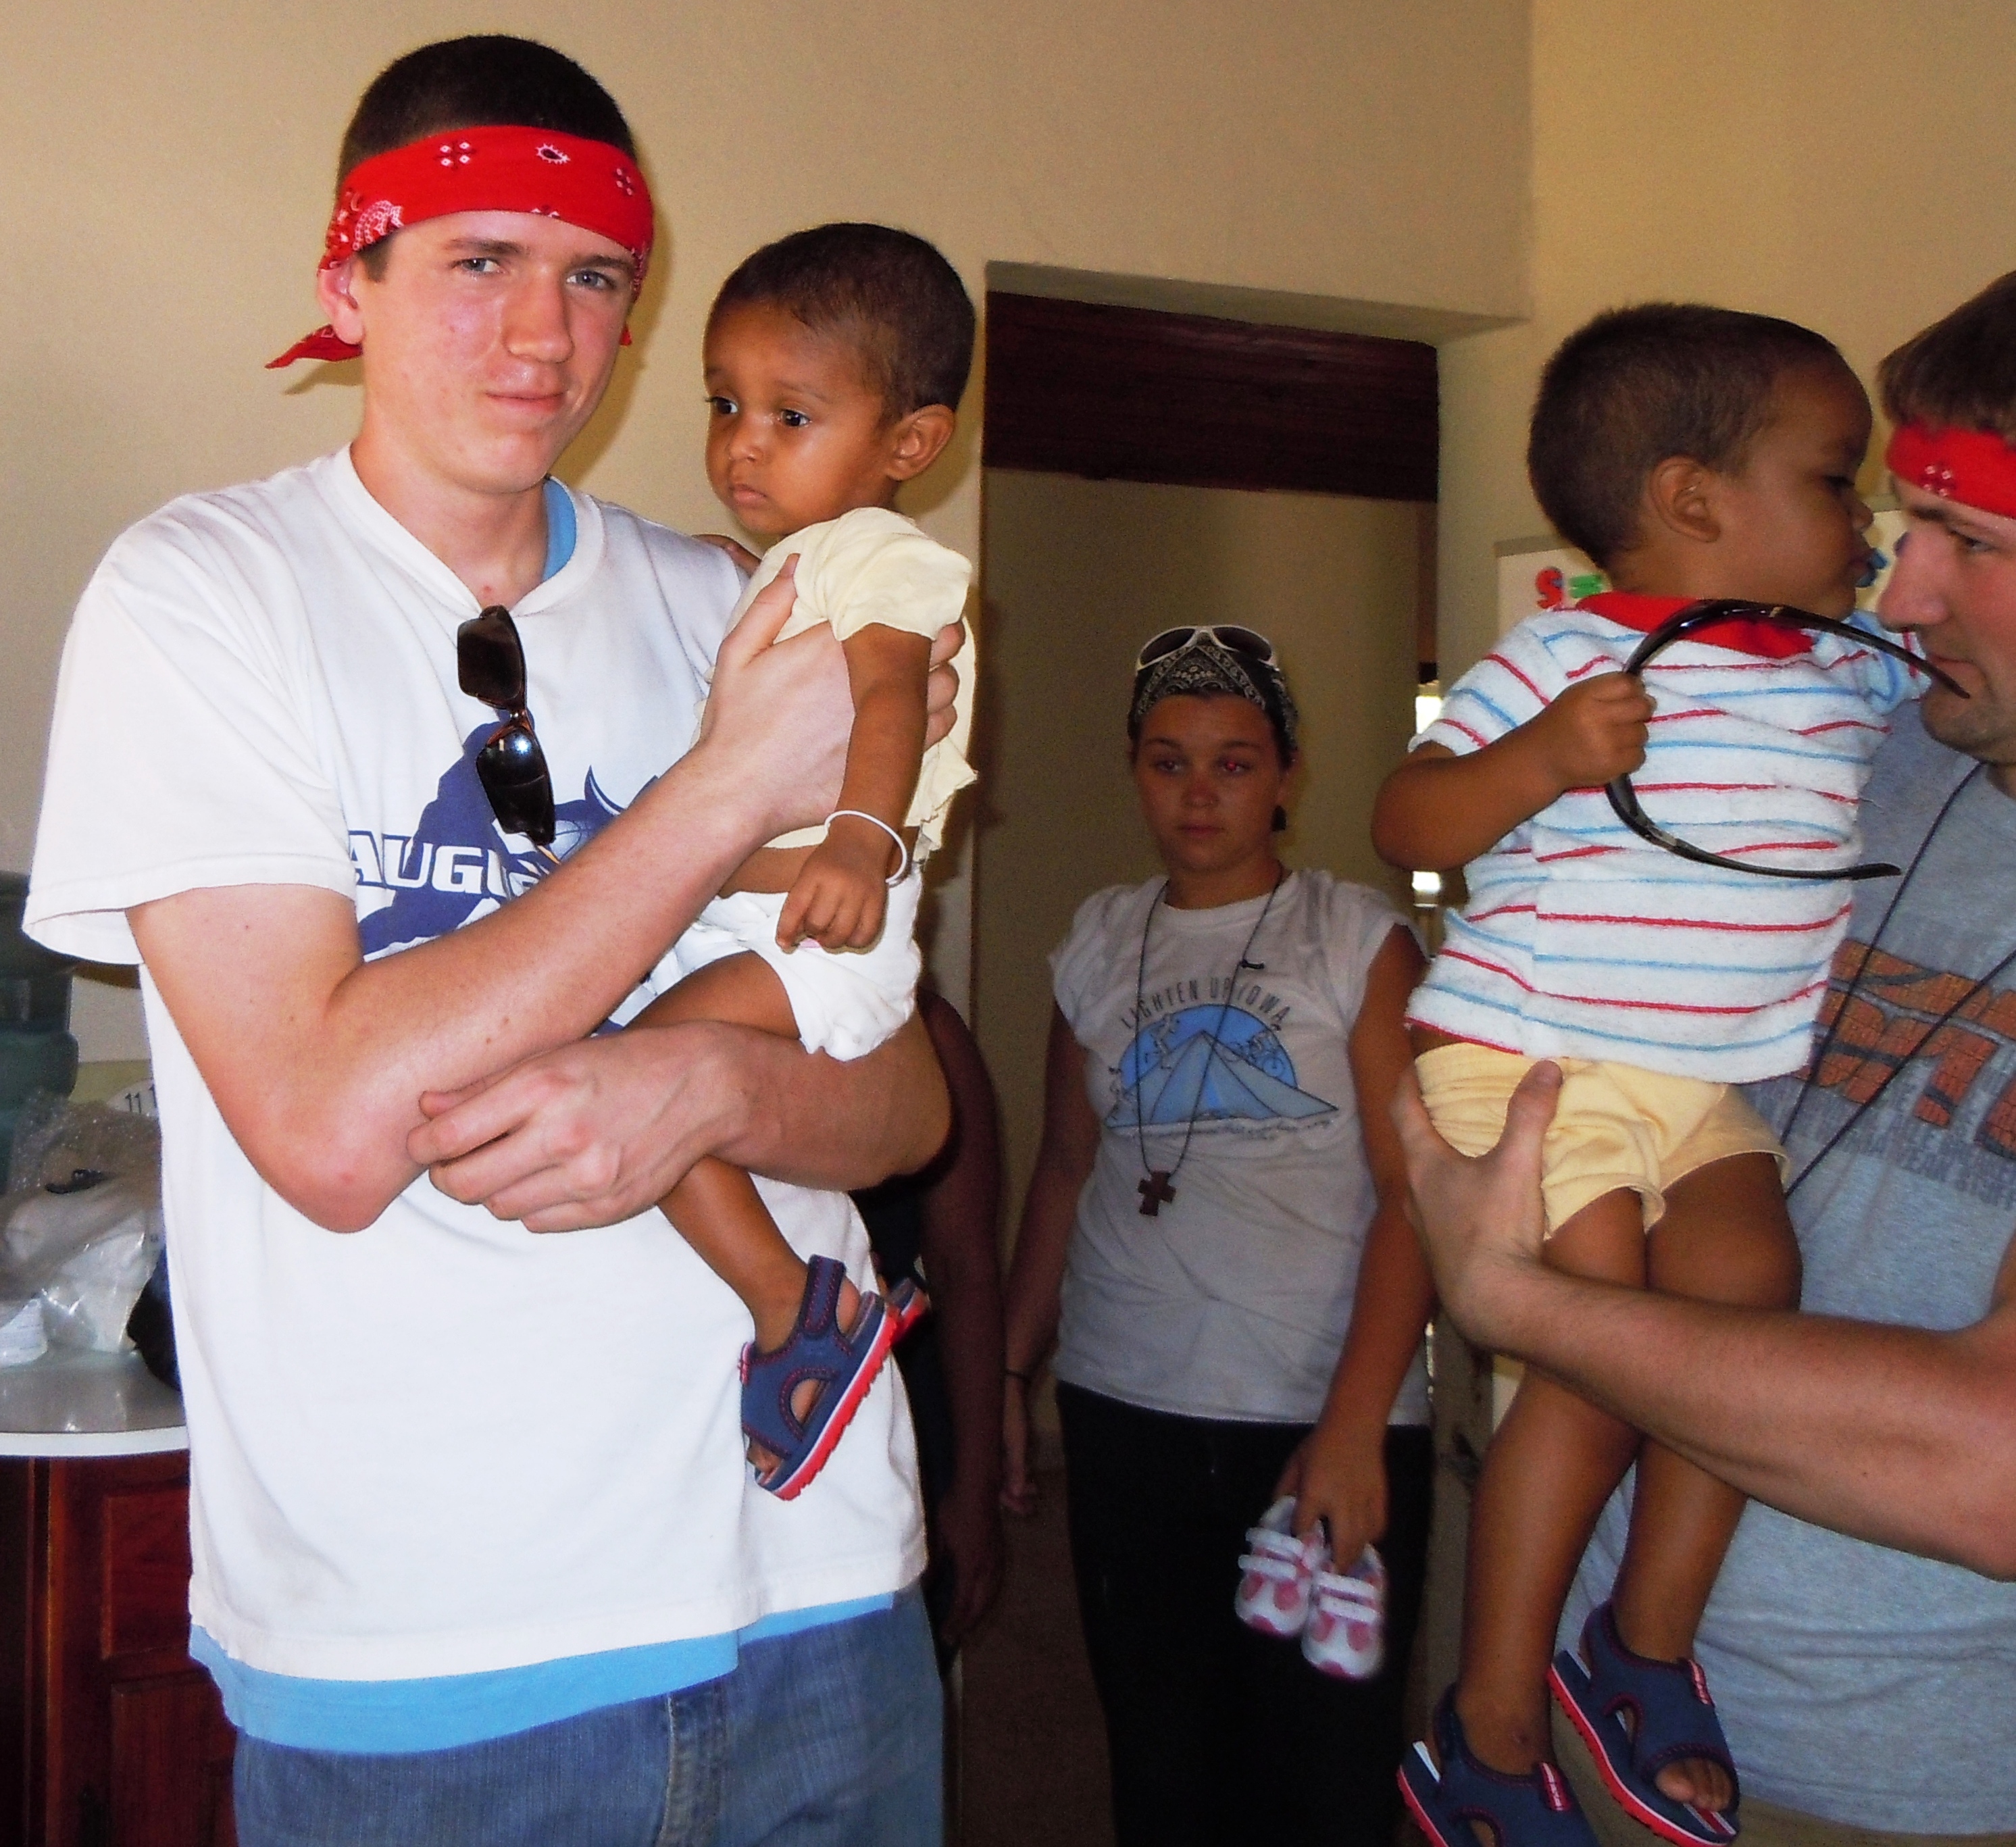 Missioners visit the Malnutrition Center in Sulaco